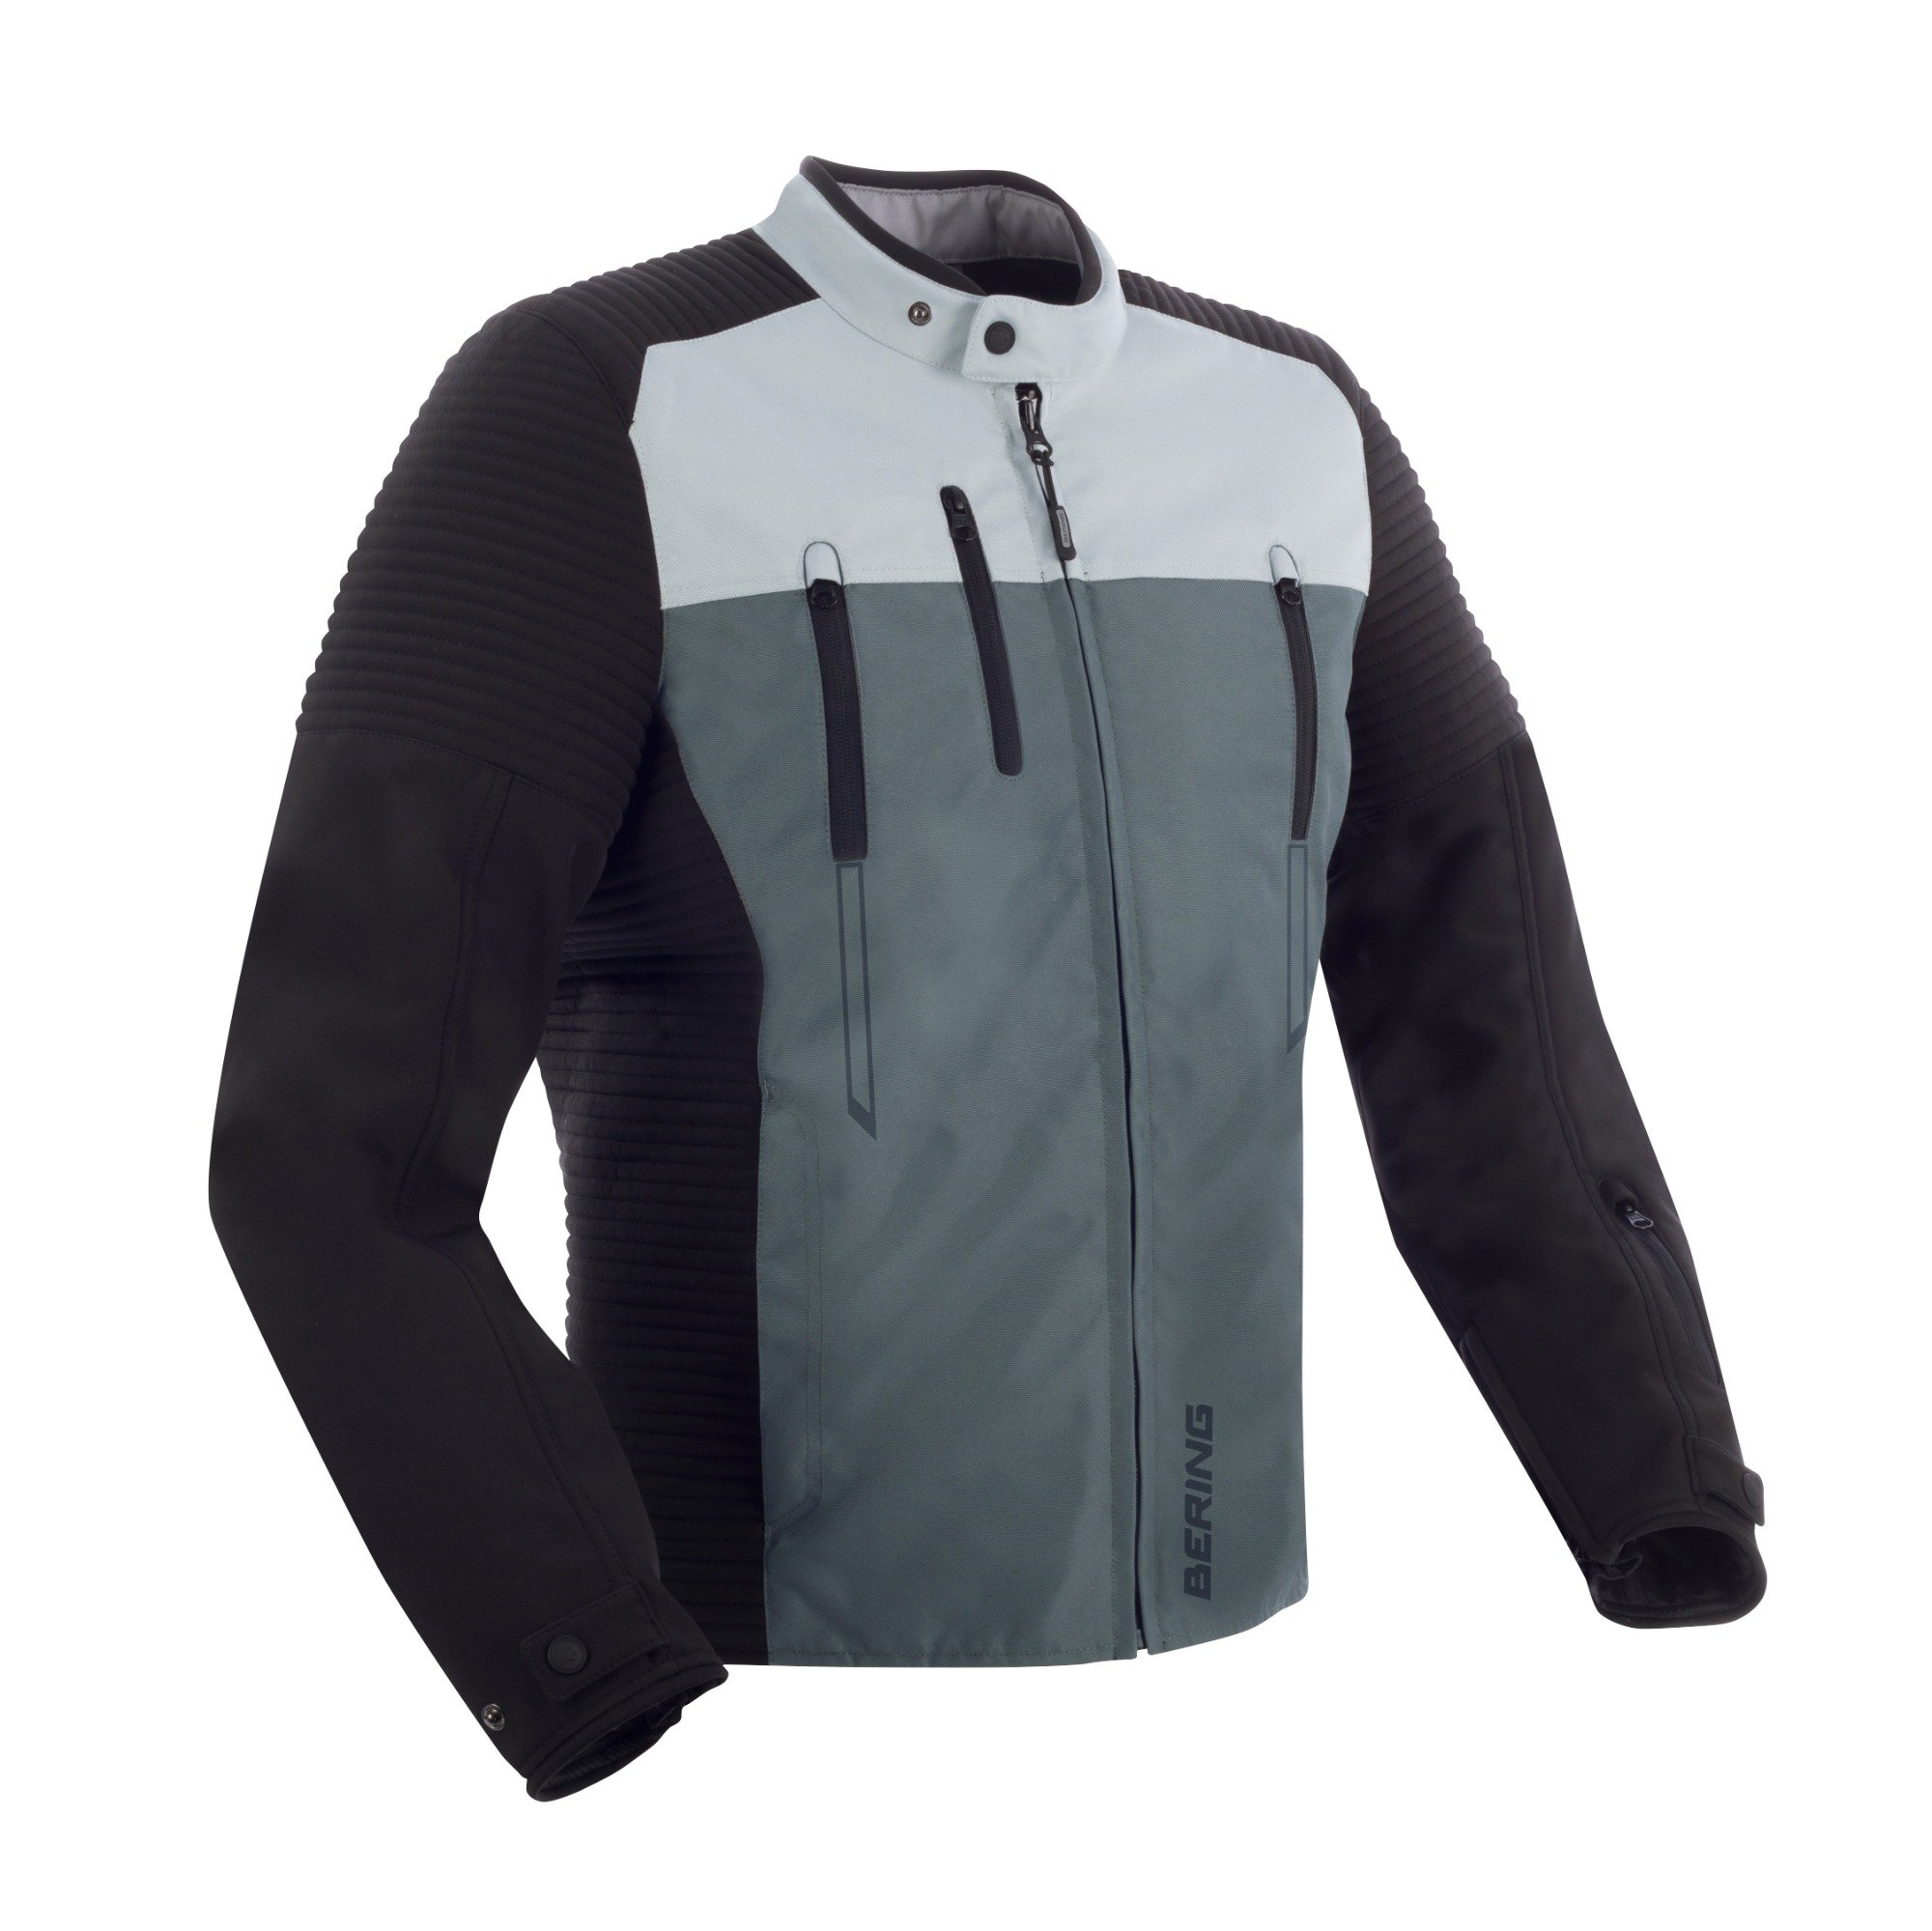 Image of Bering Crosser Jacket Gray Black Size S ID 3660815168998